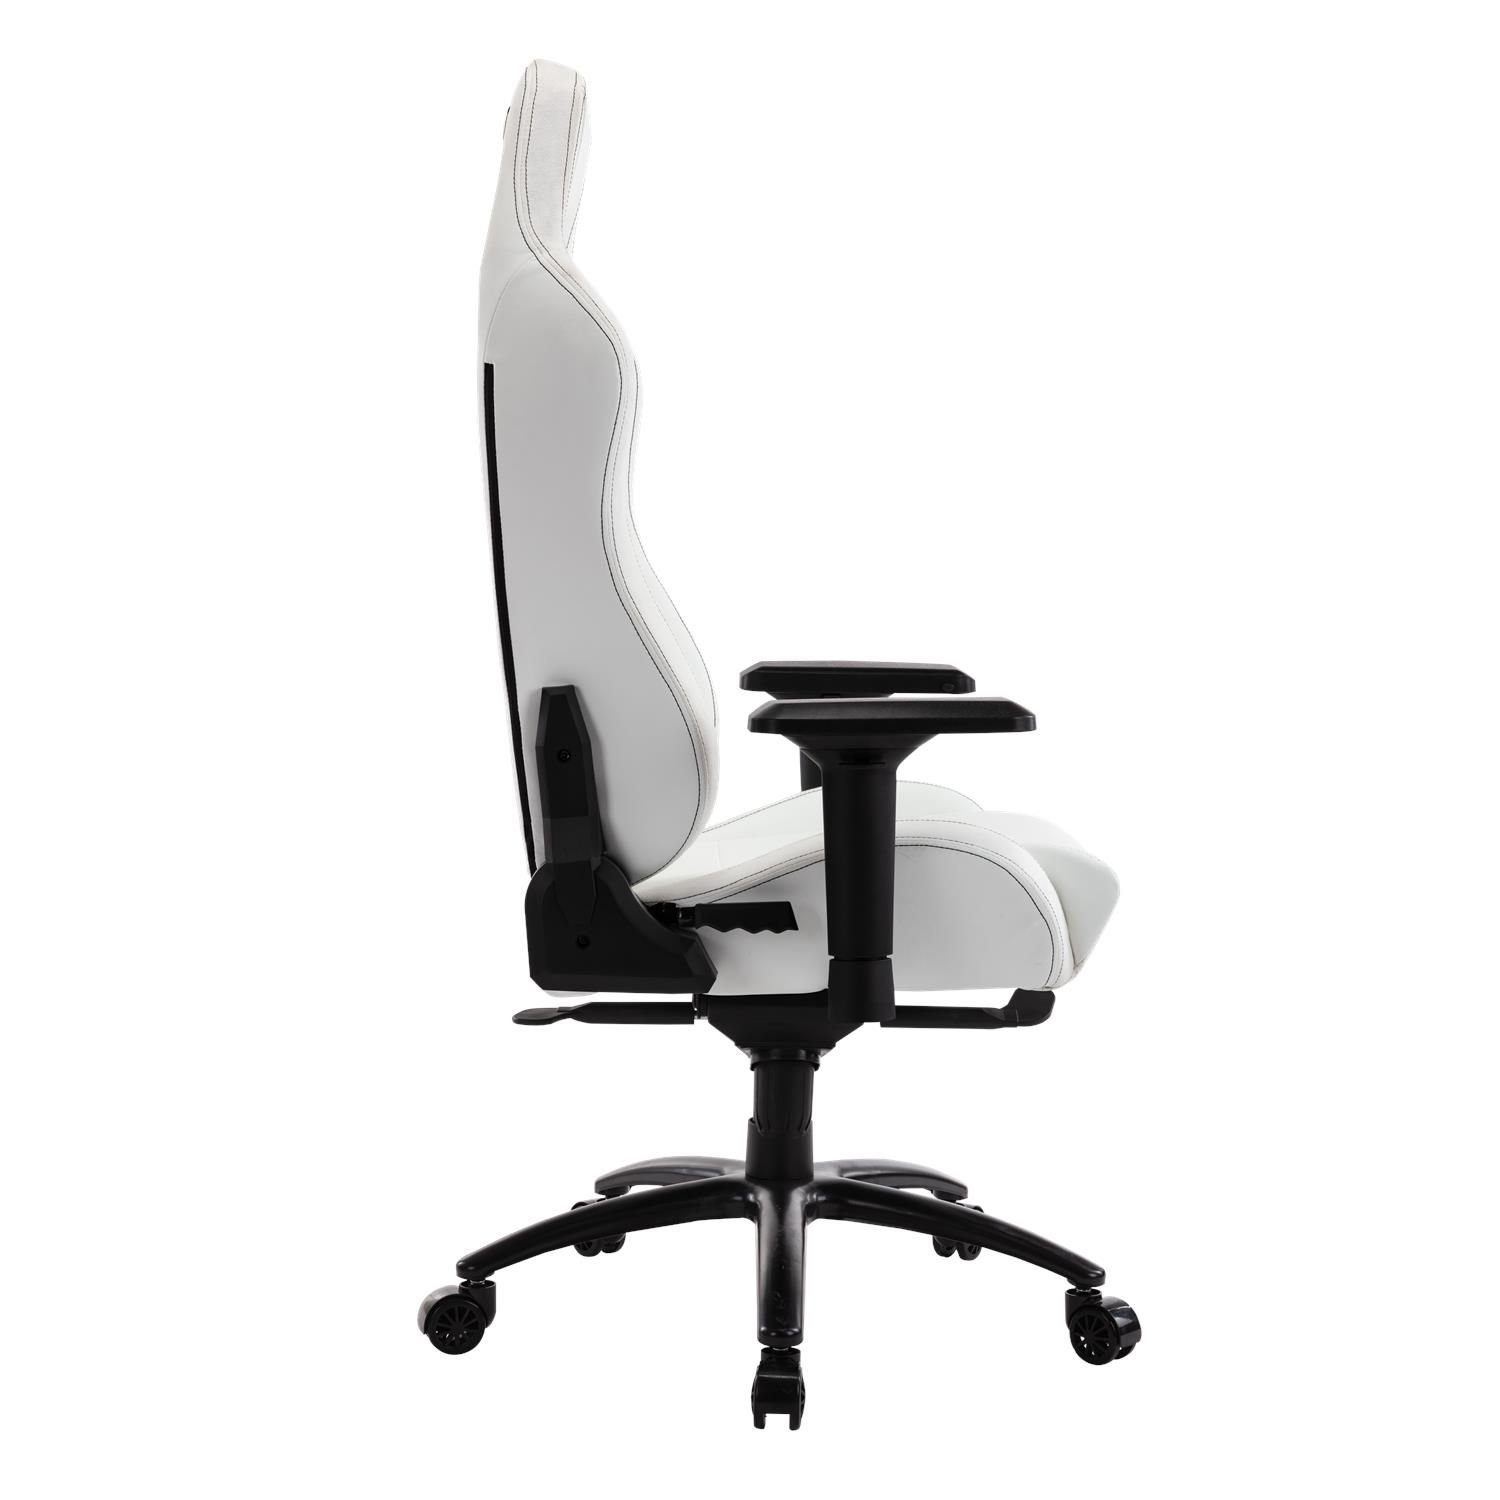 (kein weiß Bürostuhl neigbar, belastbar Gaming höhenverstellbar, Pro Set), Comfort Racing 145kg Gaming-Stuhl E-Sport L33T Stuhl bis